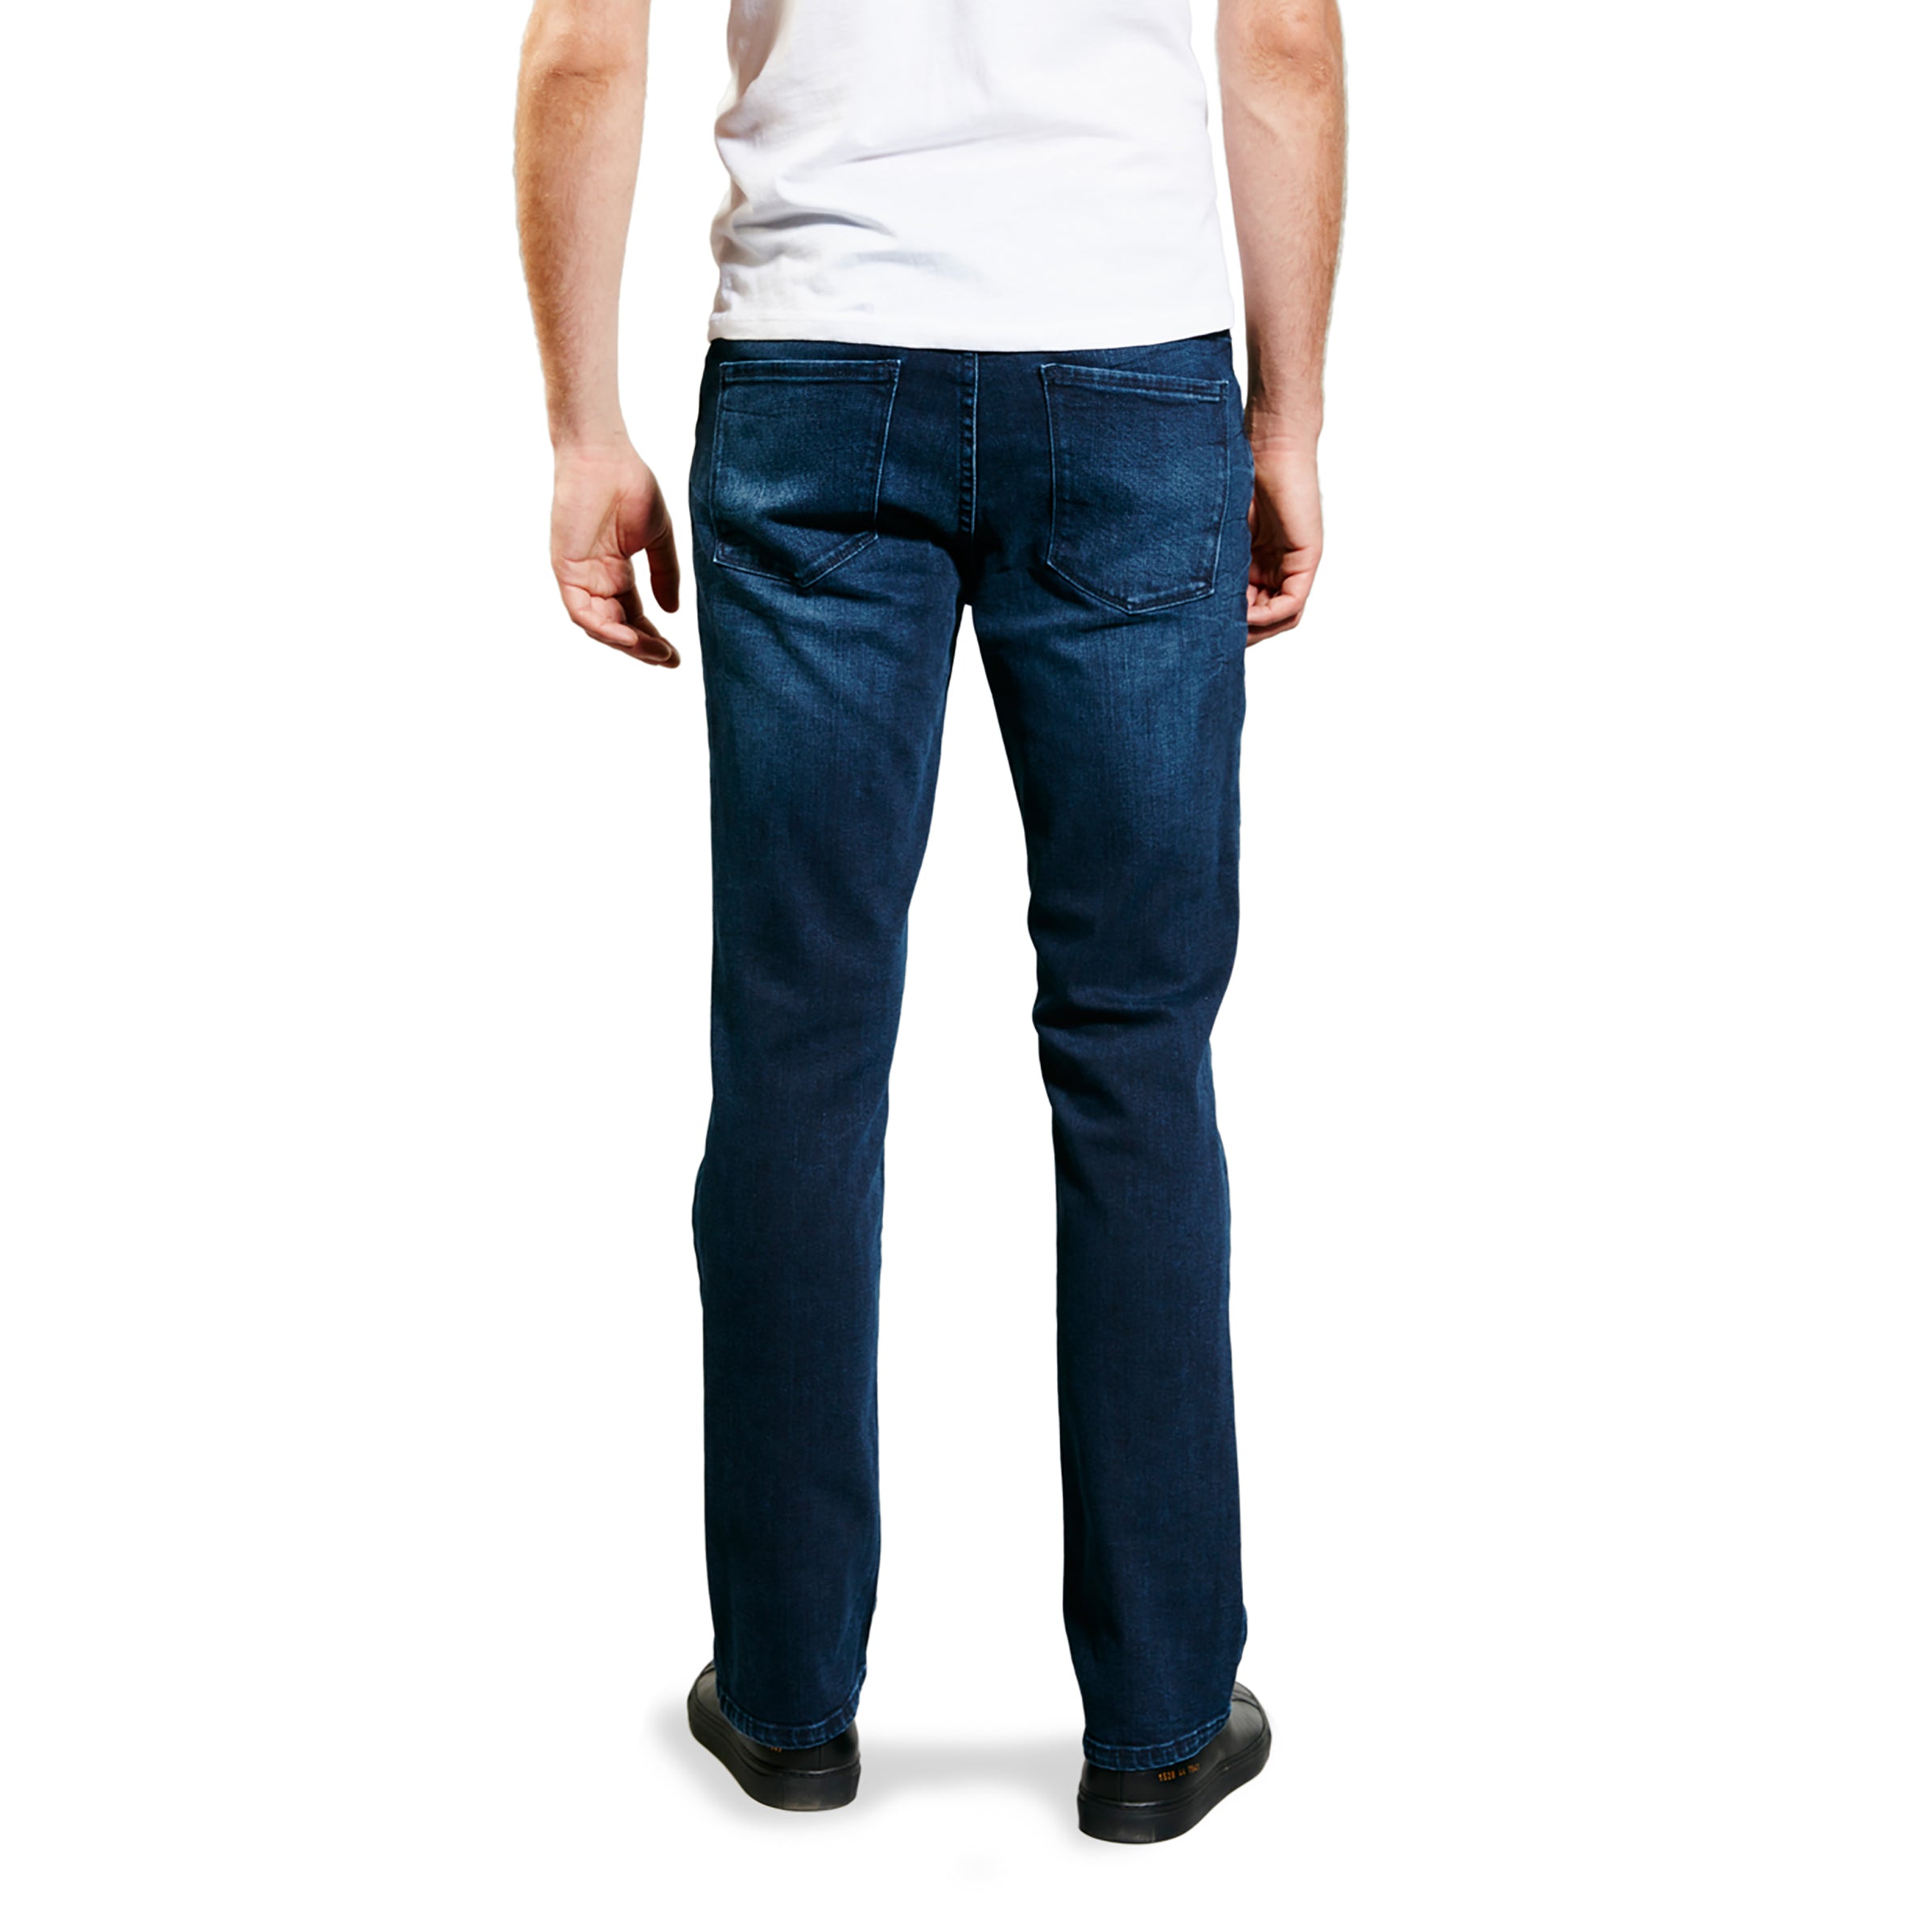 Men wearing Bleu  Médium/Foncé Straight Staple Jeans